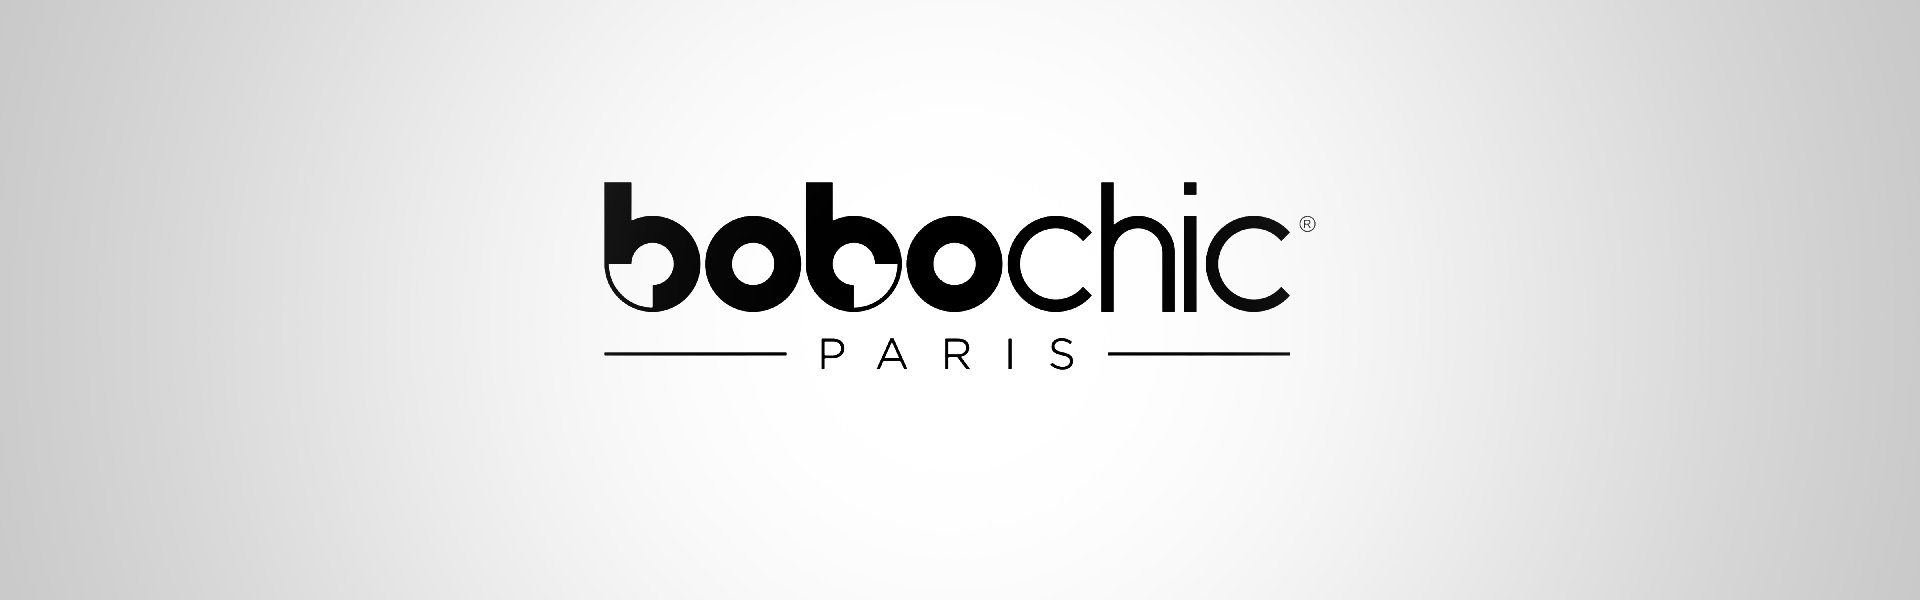 Pufs BoboChic Nihad, brūns BoboChic Paris